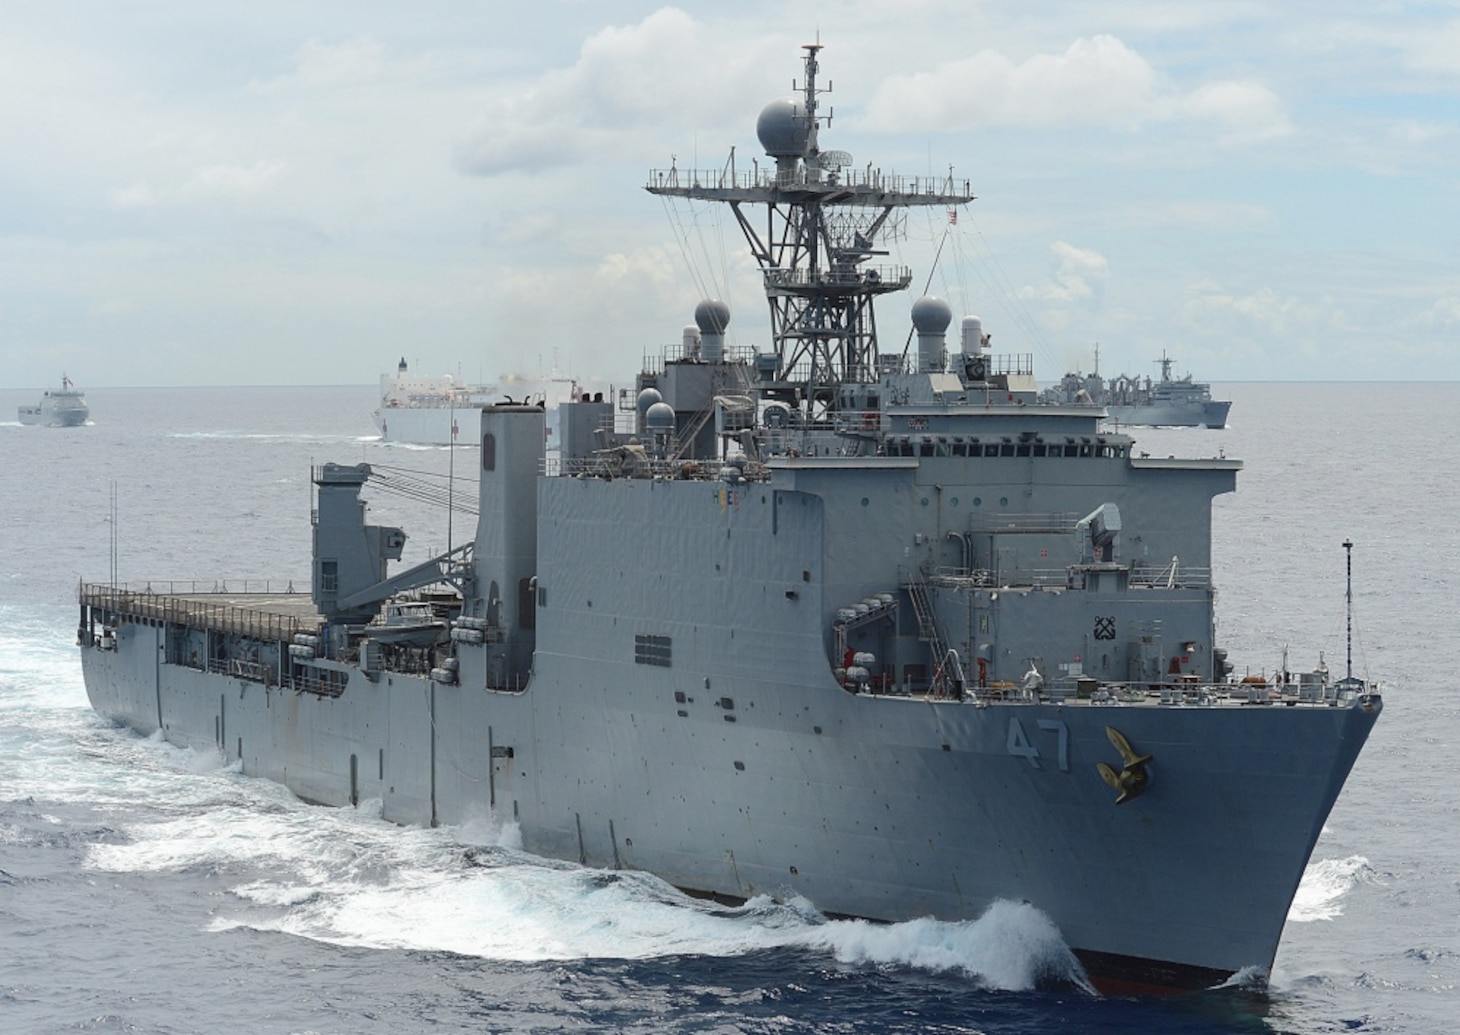 U.S. Navy stock photo. Amphibious dock landing ship USS Rushmore (LSD 47).